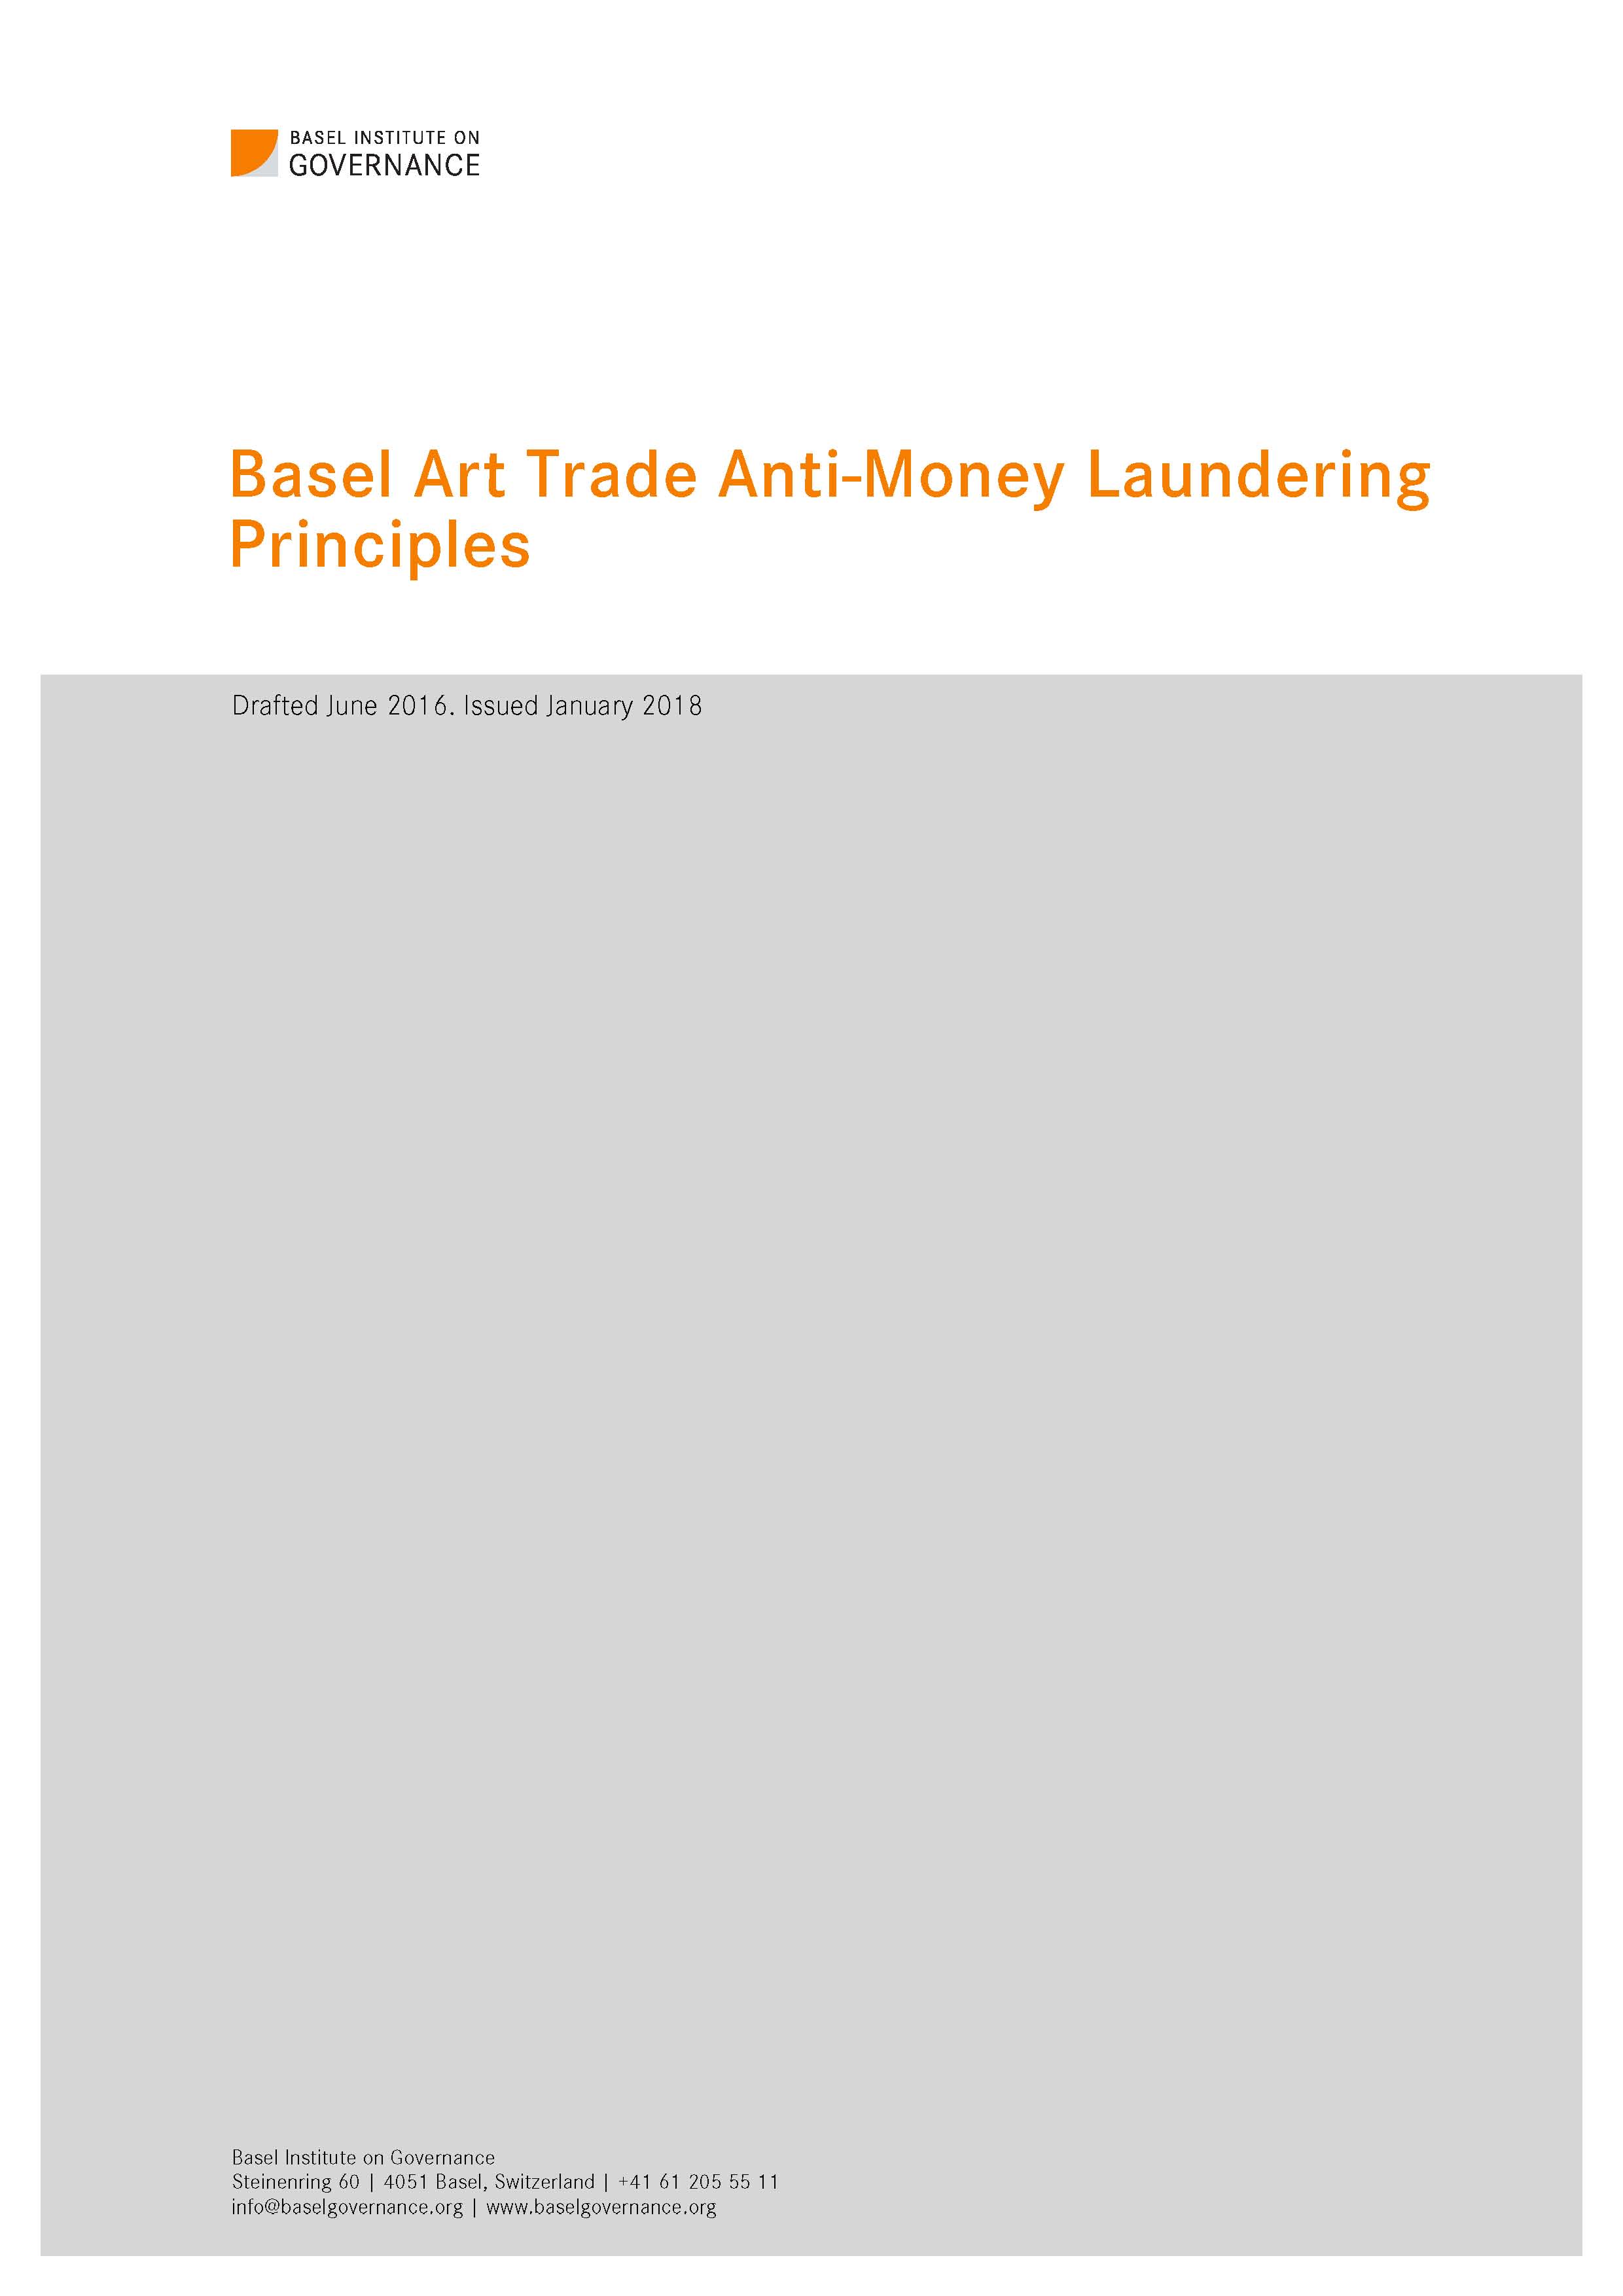 Cover of Basel Art Trade AML Principles